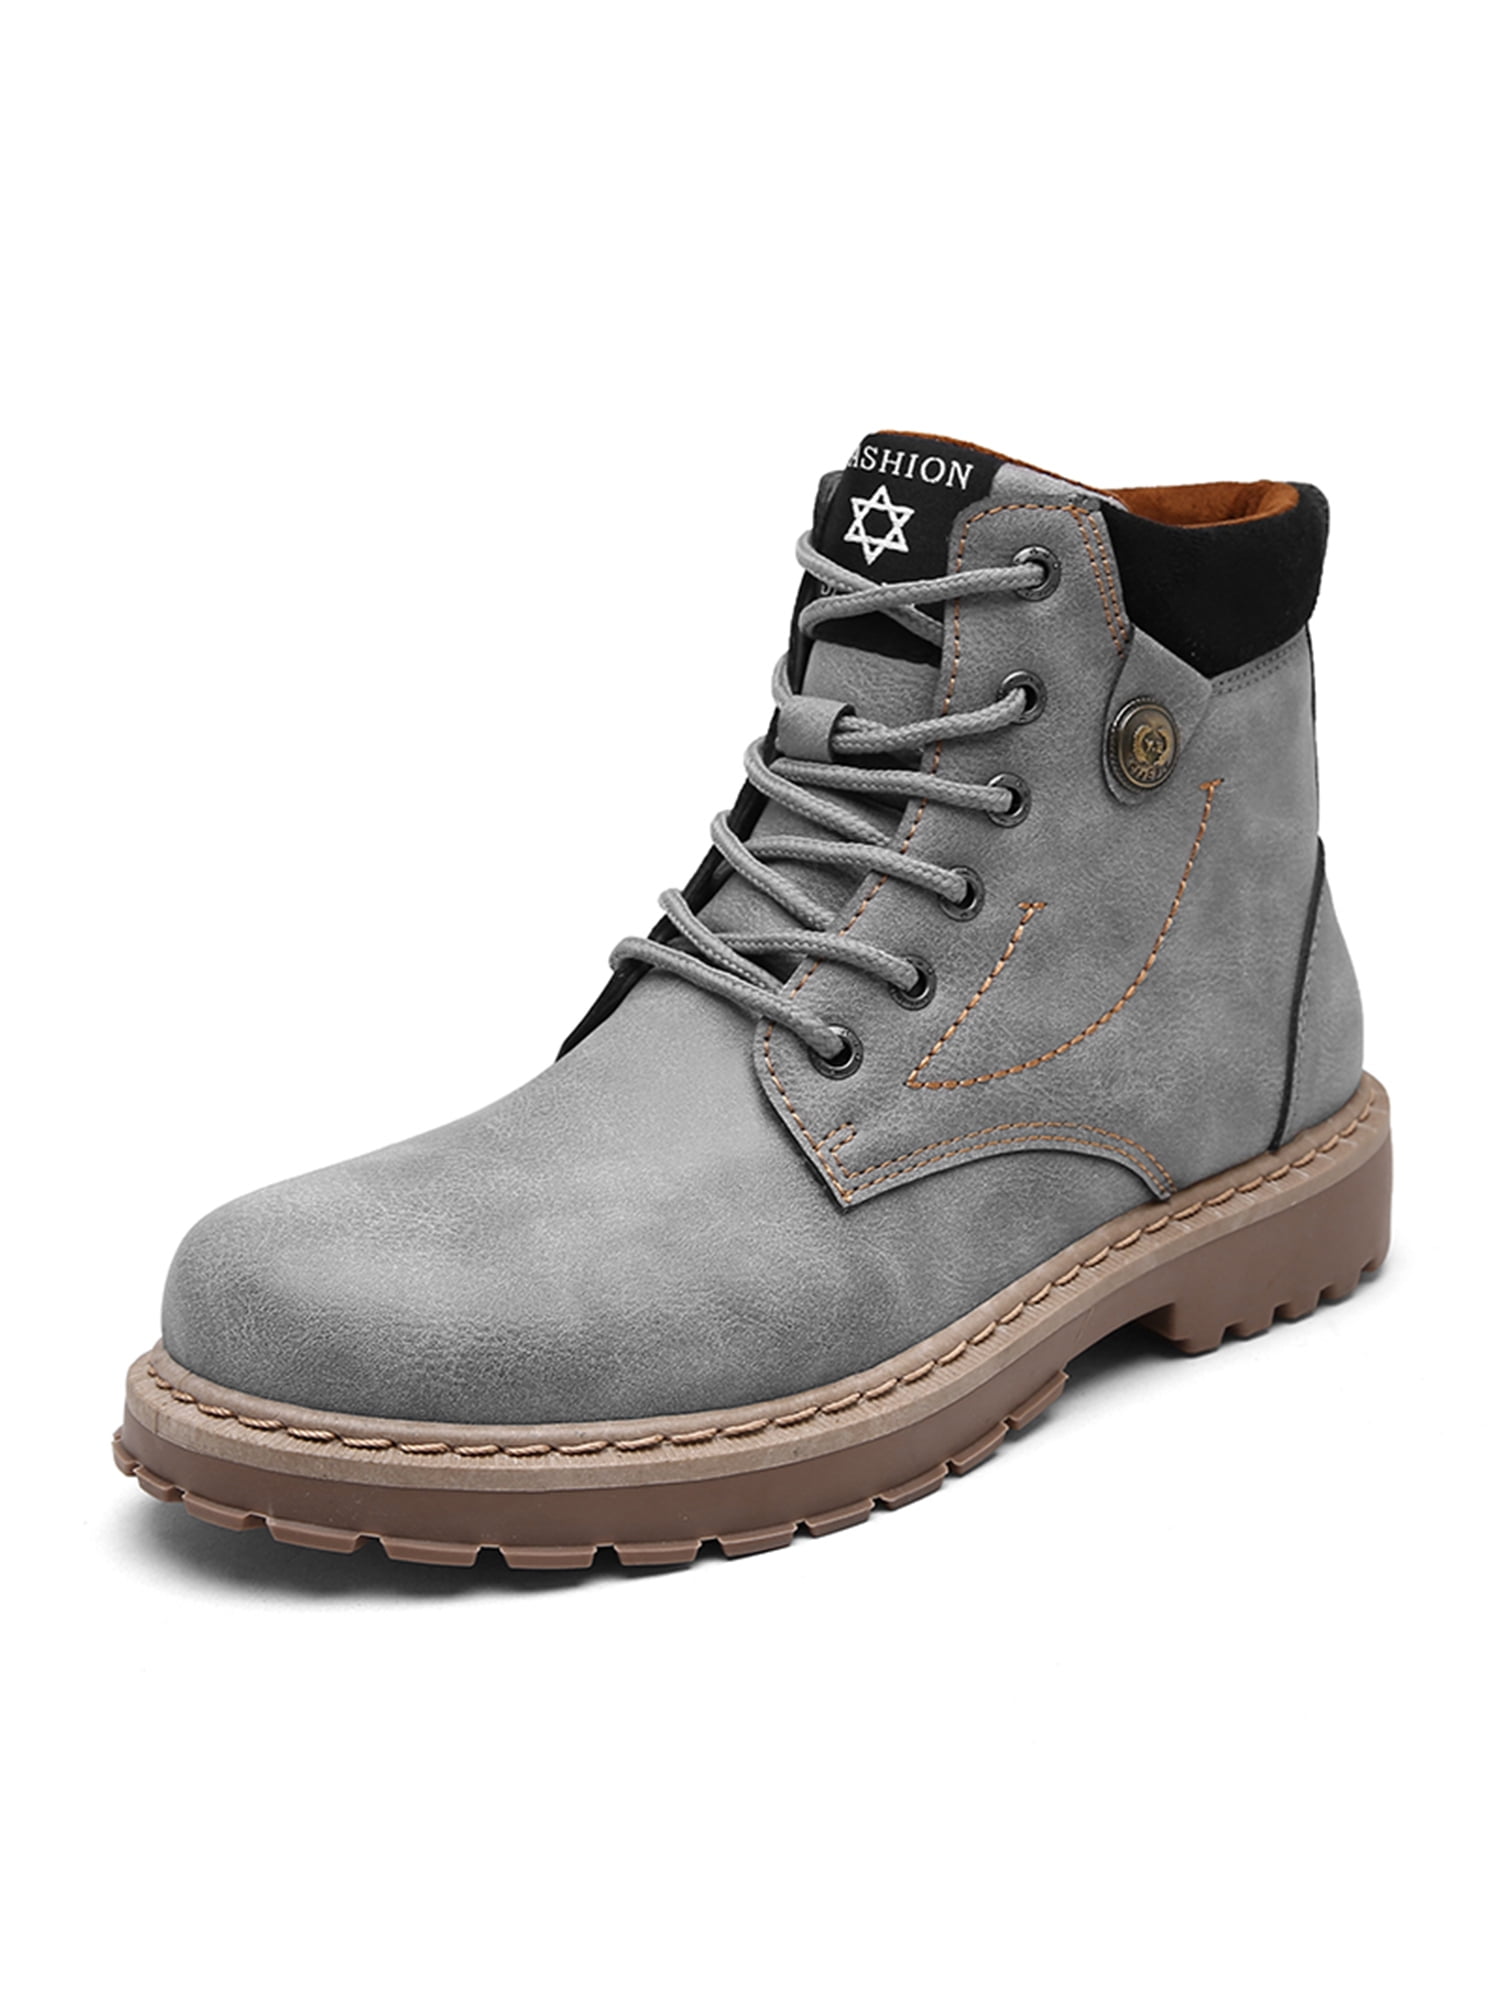 Own Shoe - Men's Martin Boots New Versatile Urban Fashion Waterproof ...